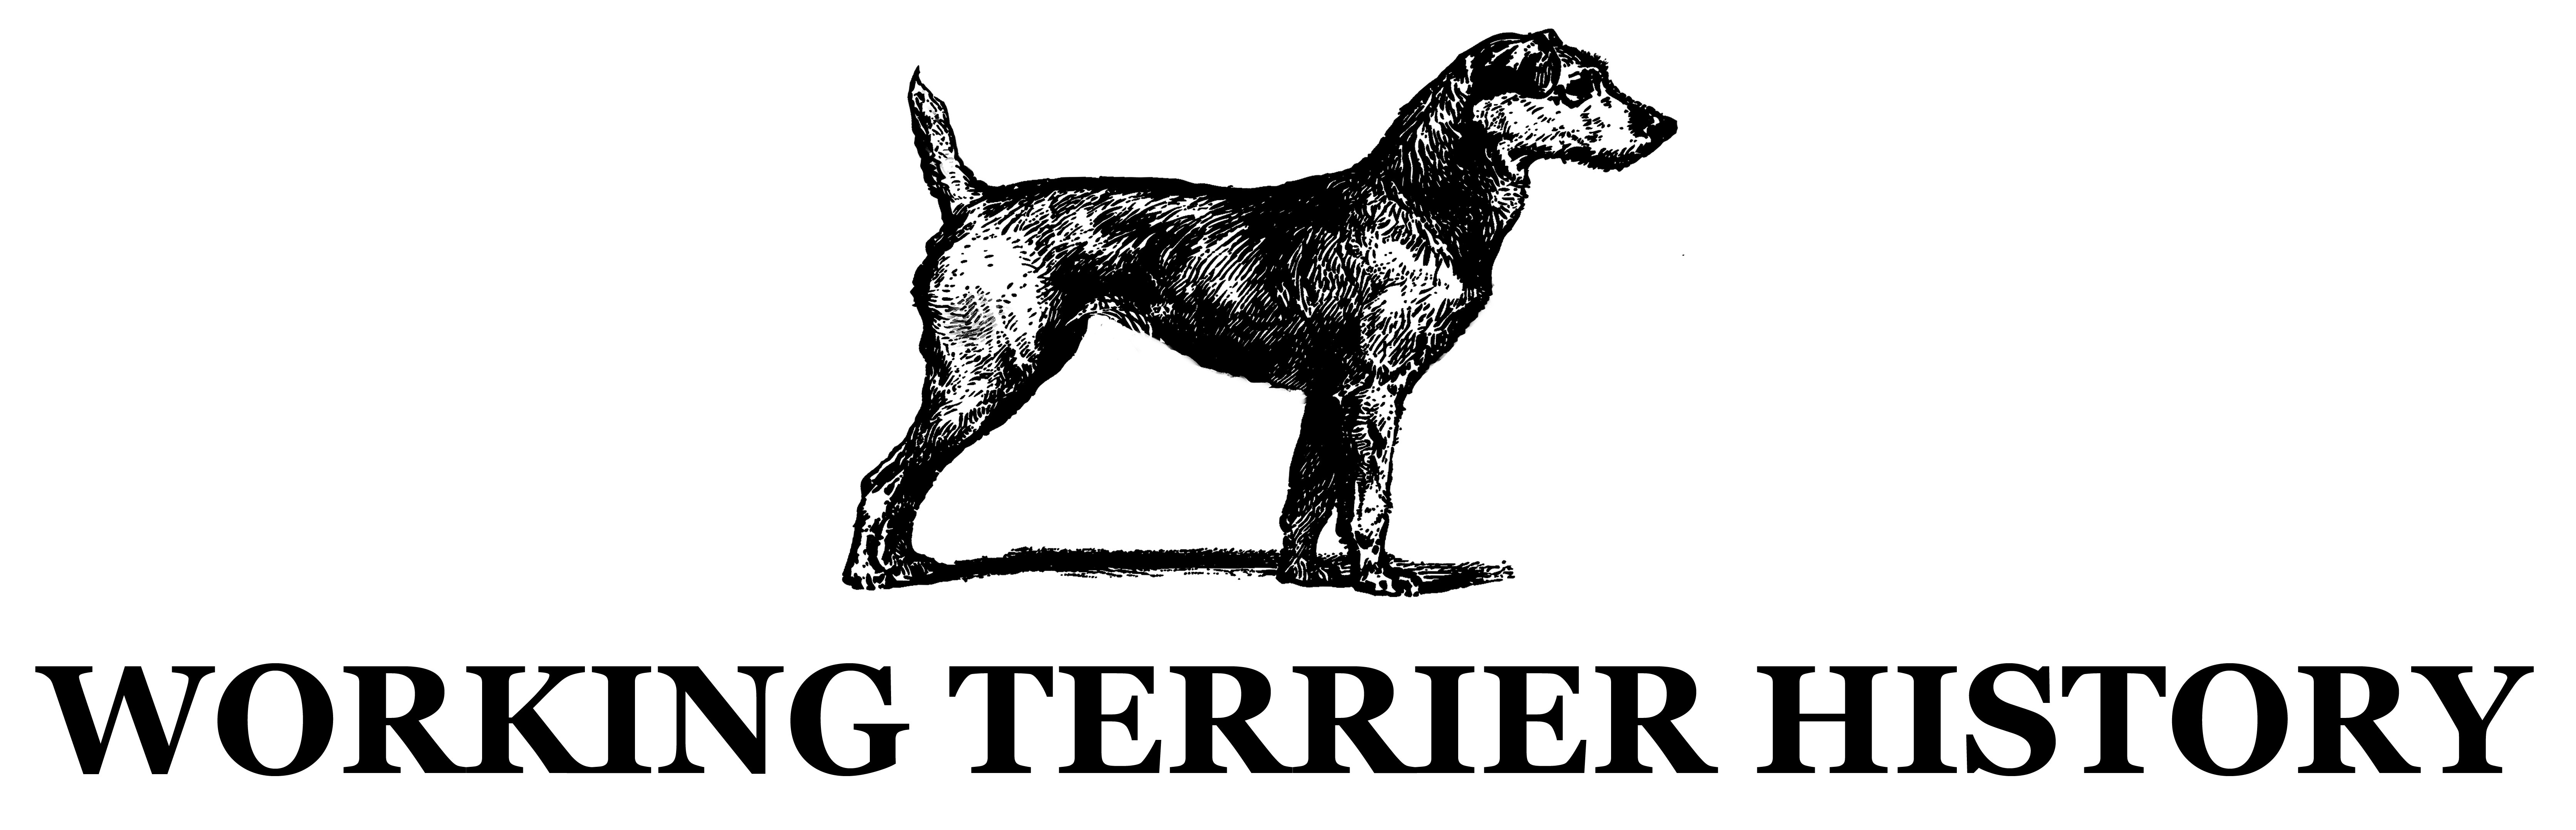 Working Terrier History